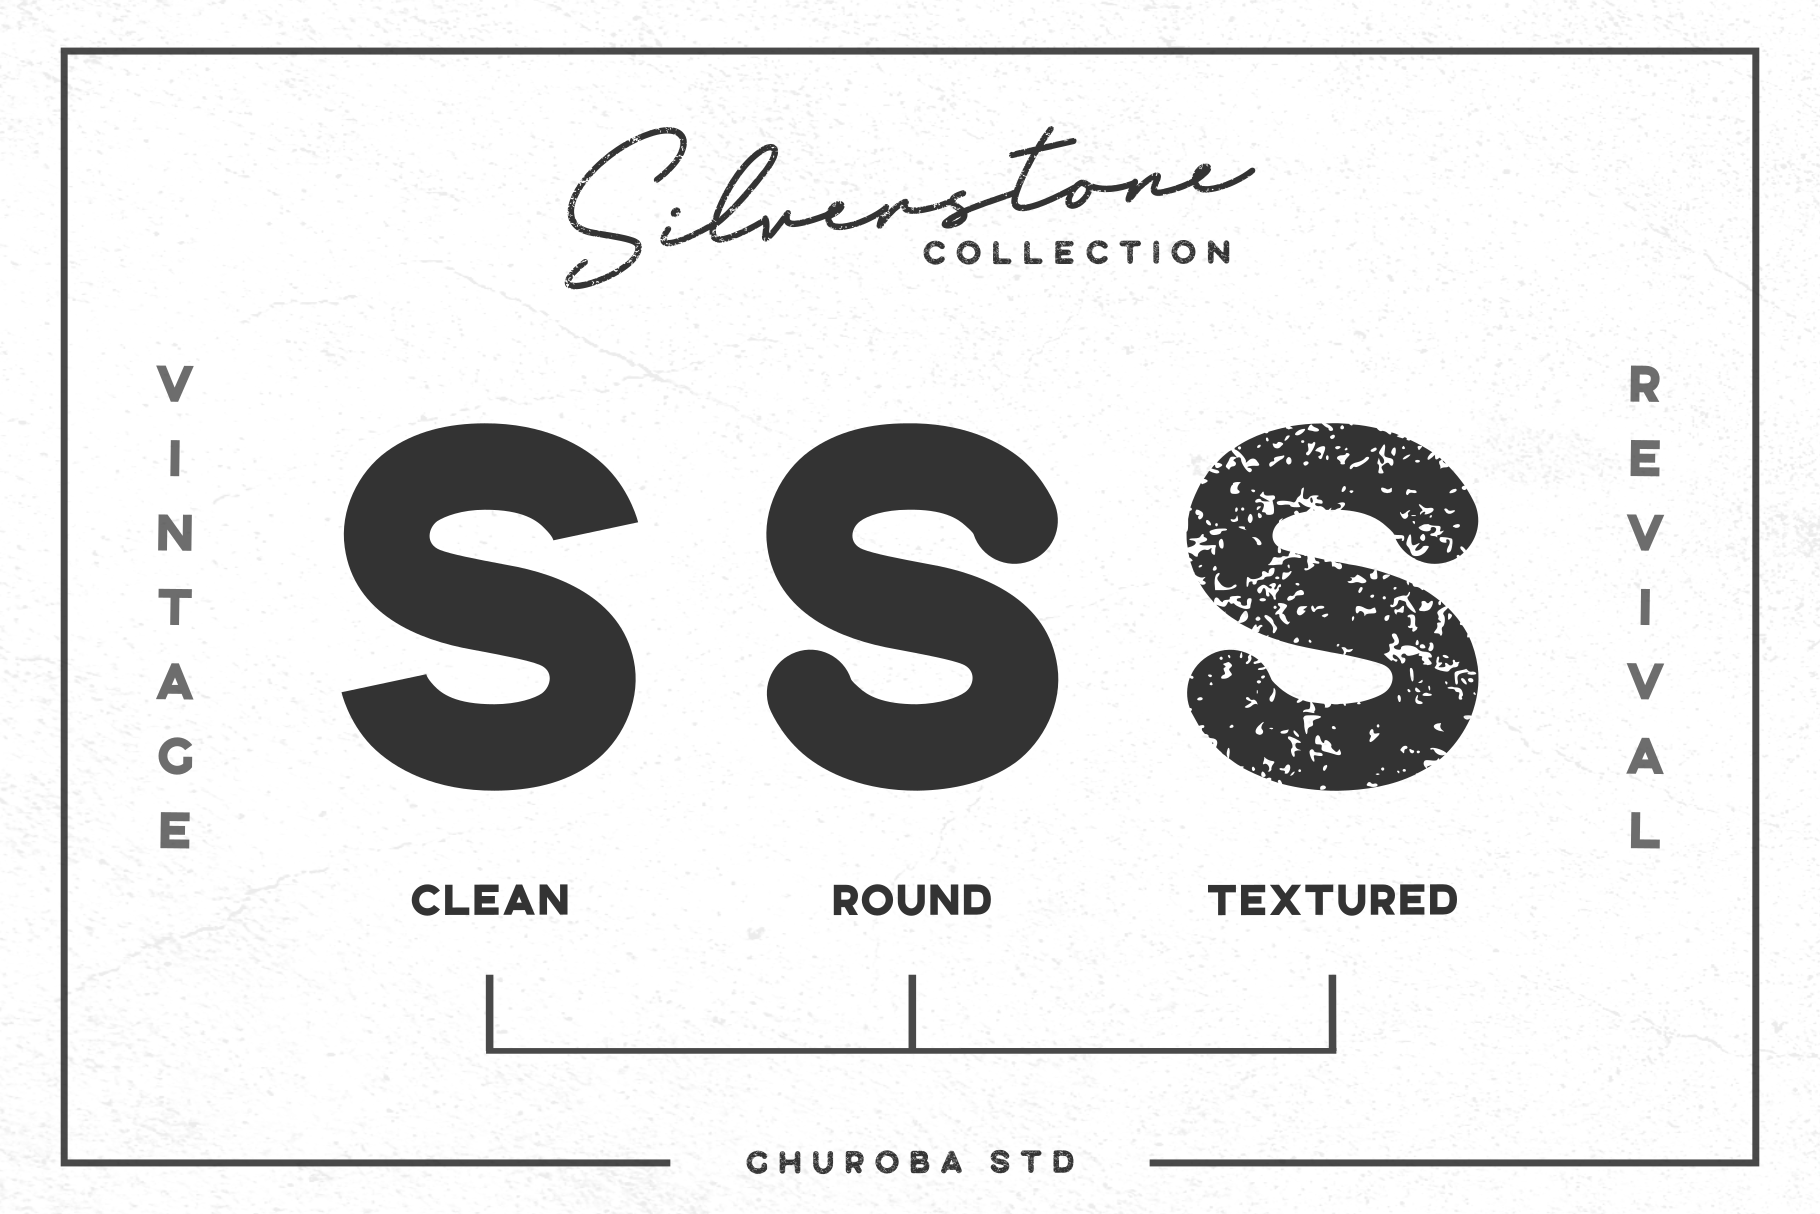 Silverstone Sans